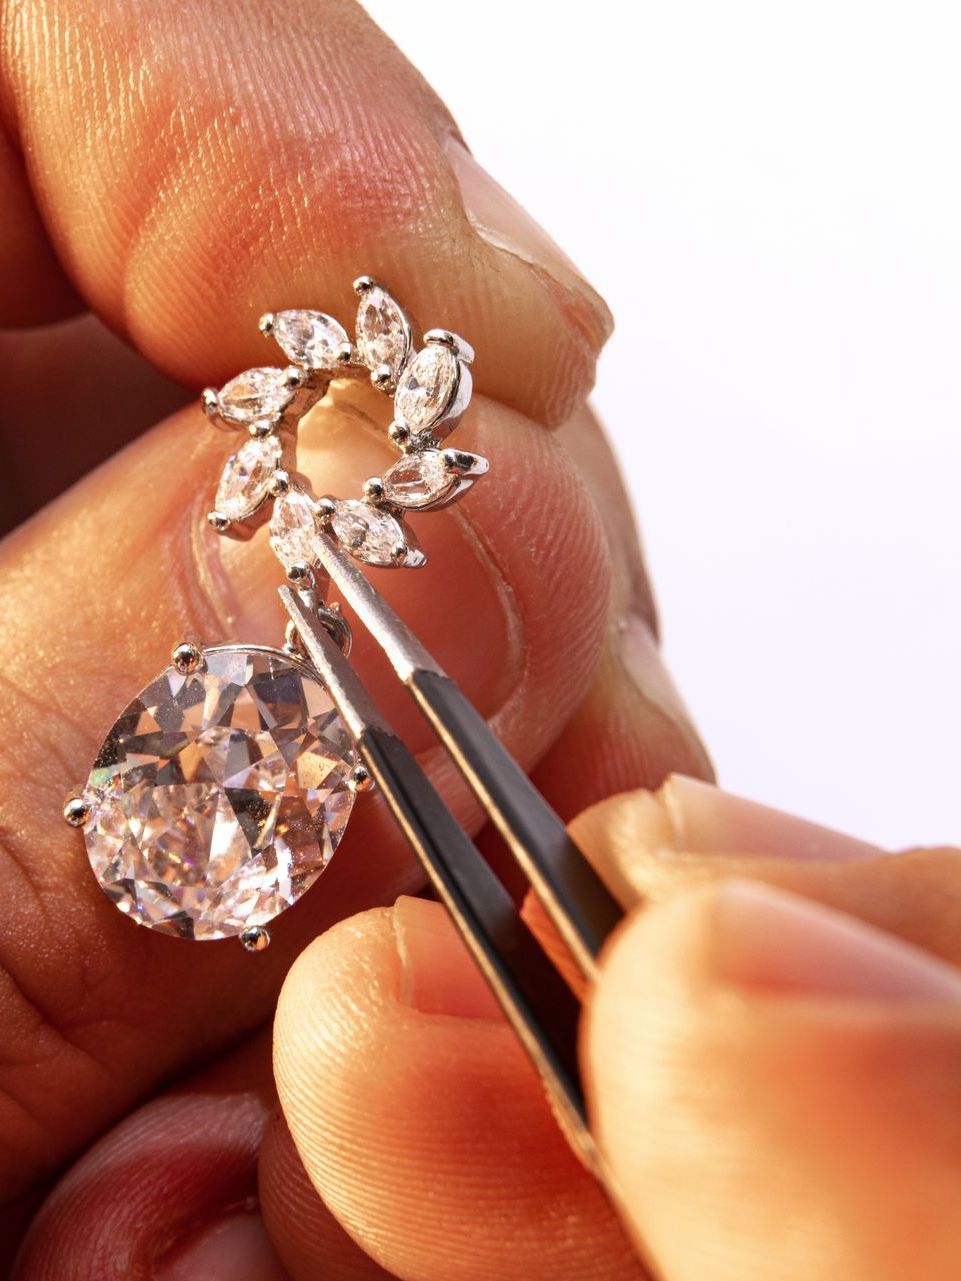 repairman repairing diamond earring